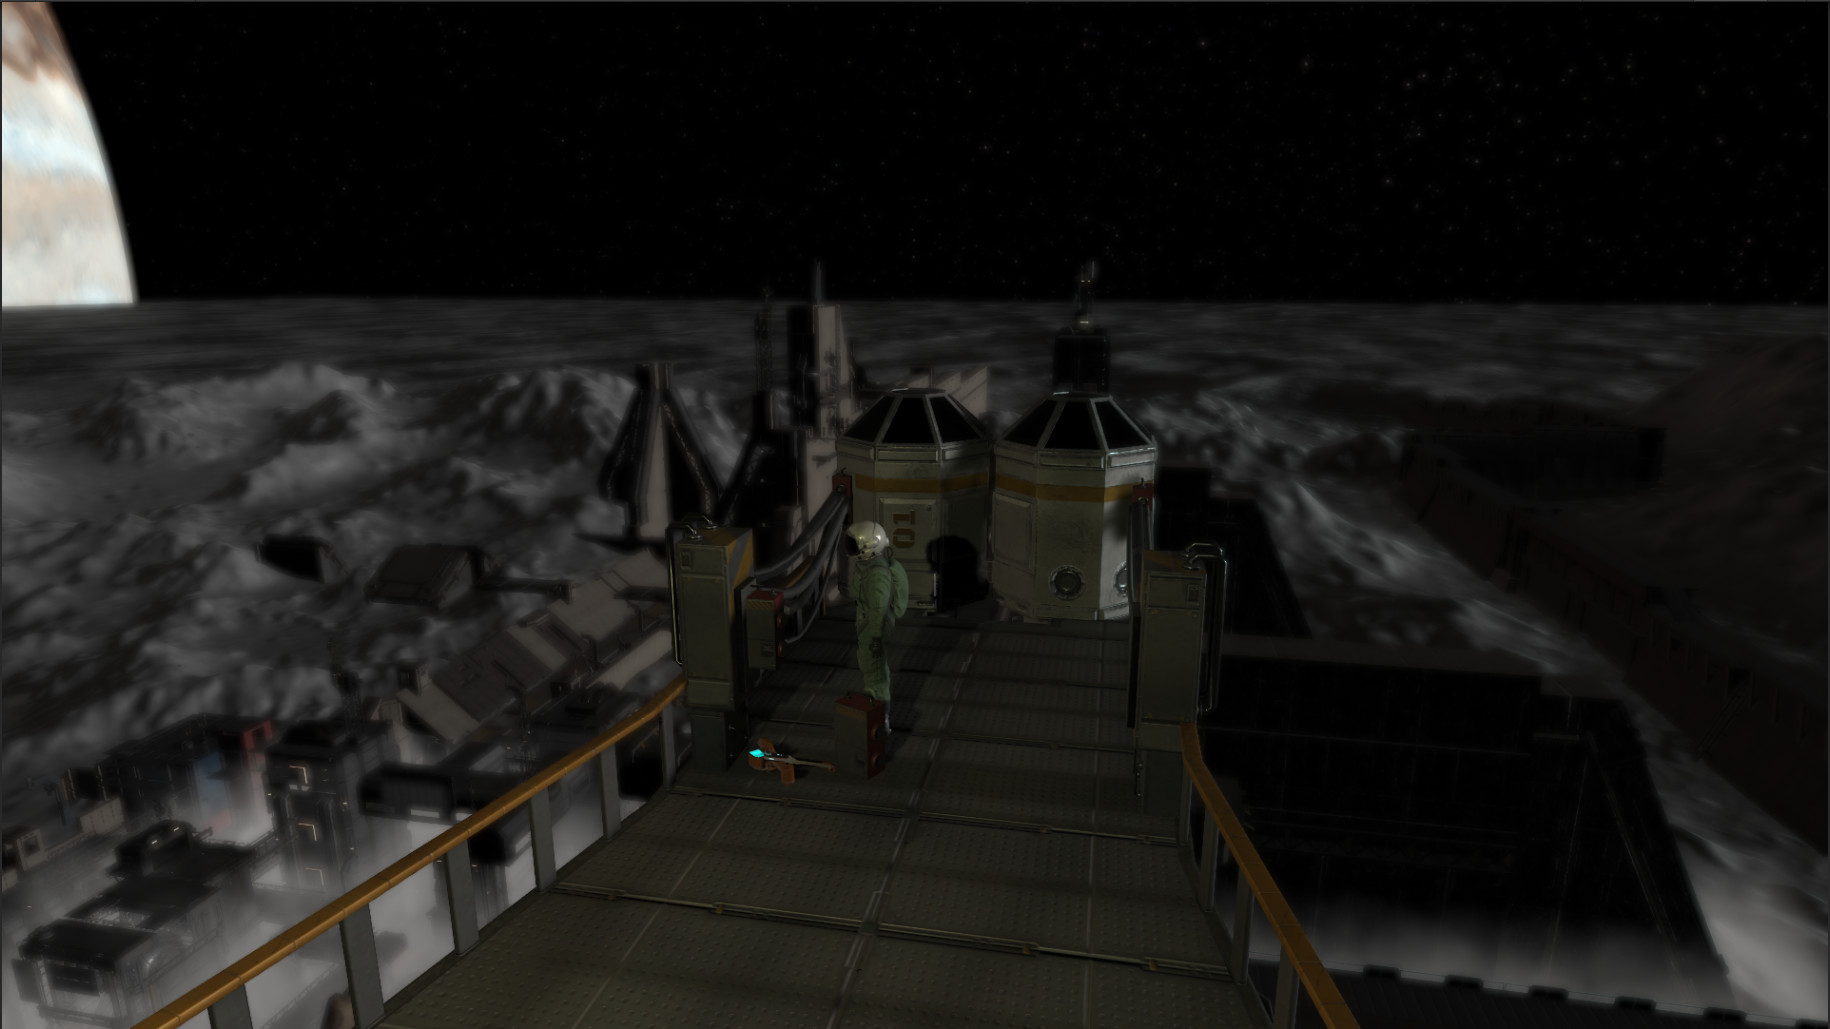 The Jovian System screenshot